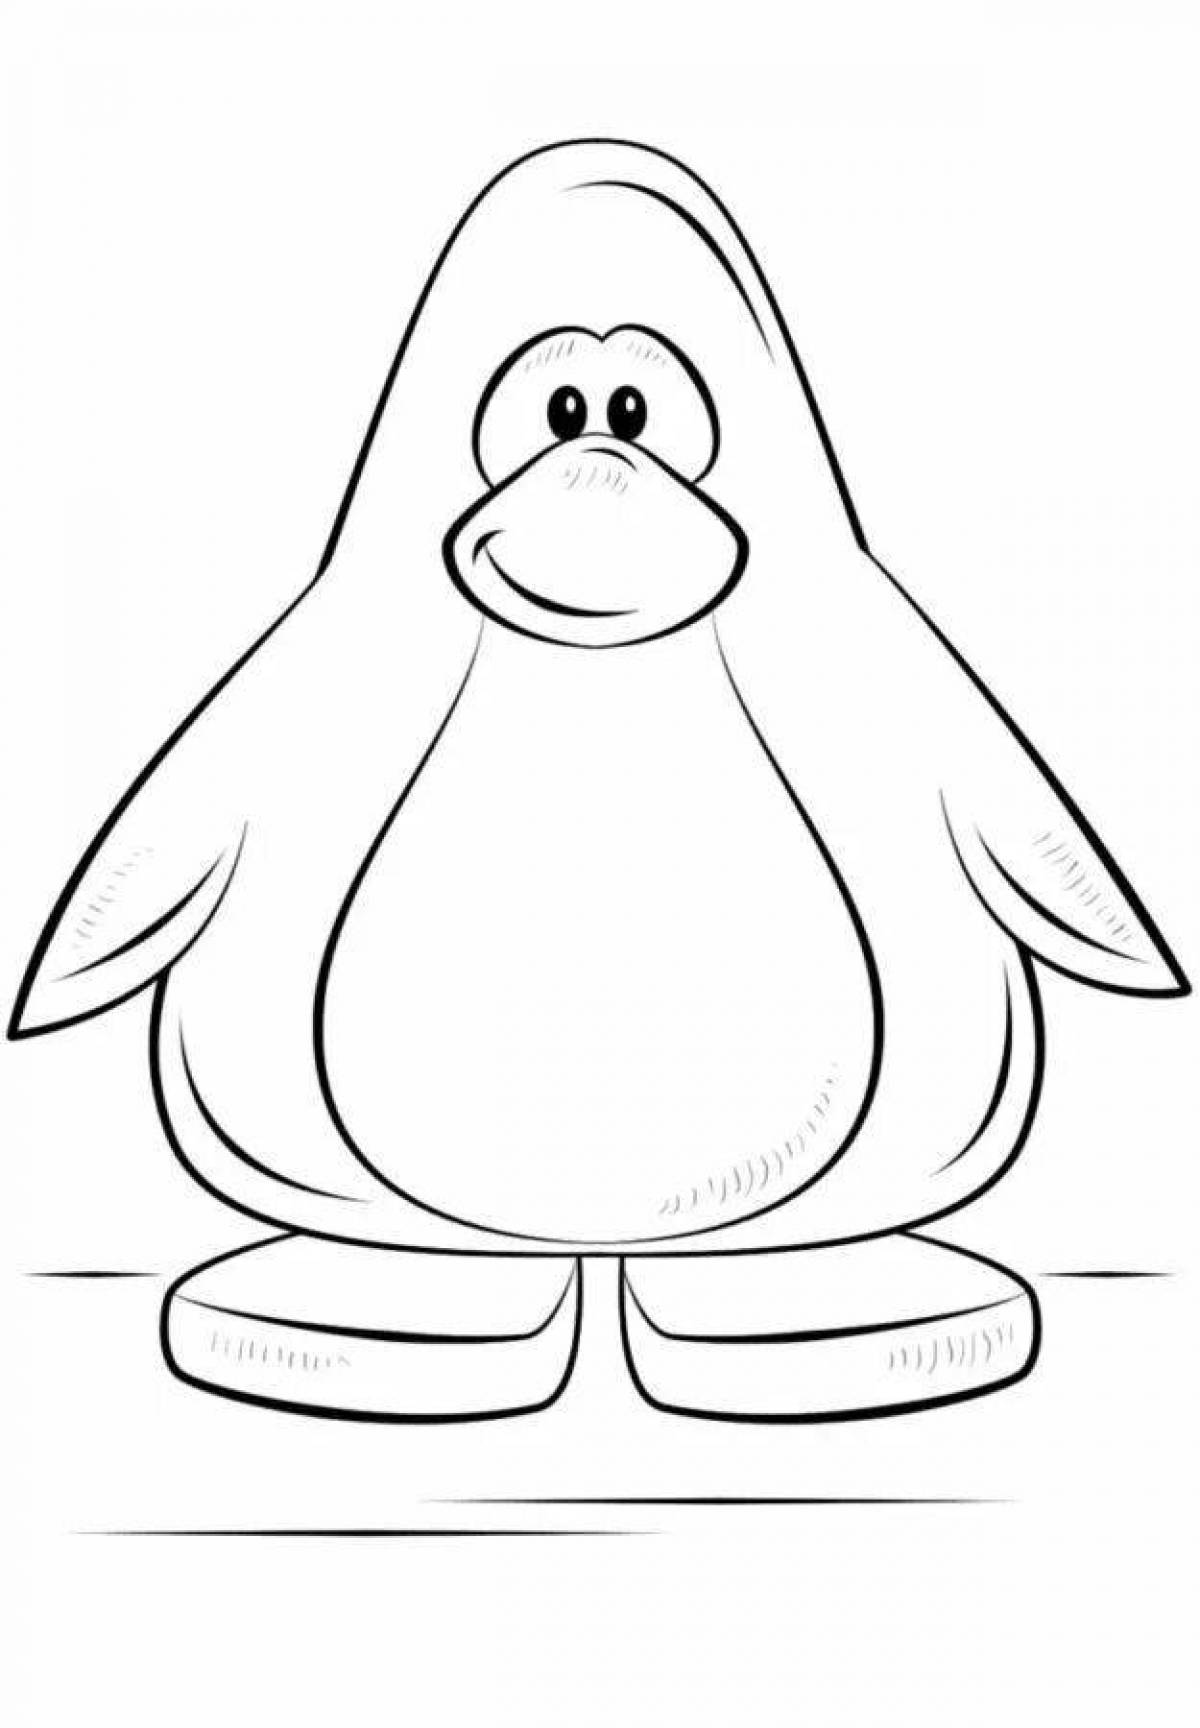 Fun penguin drawing for kids